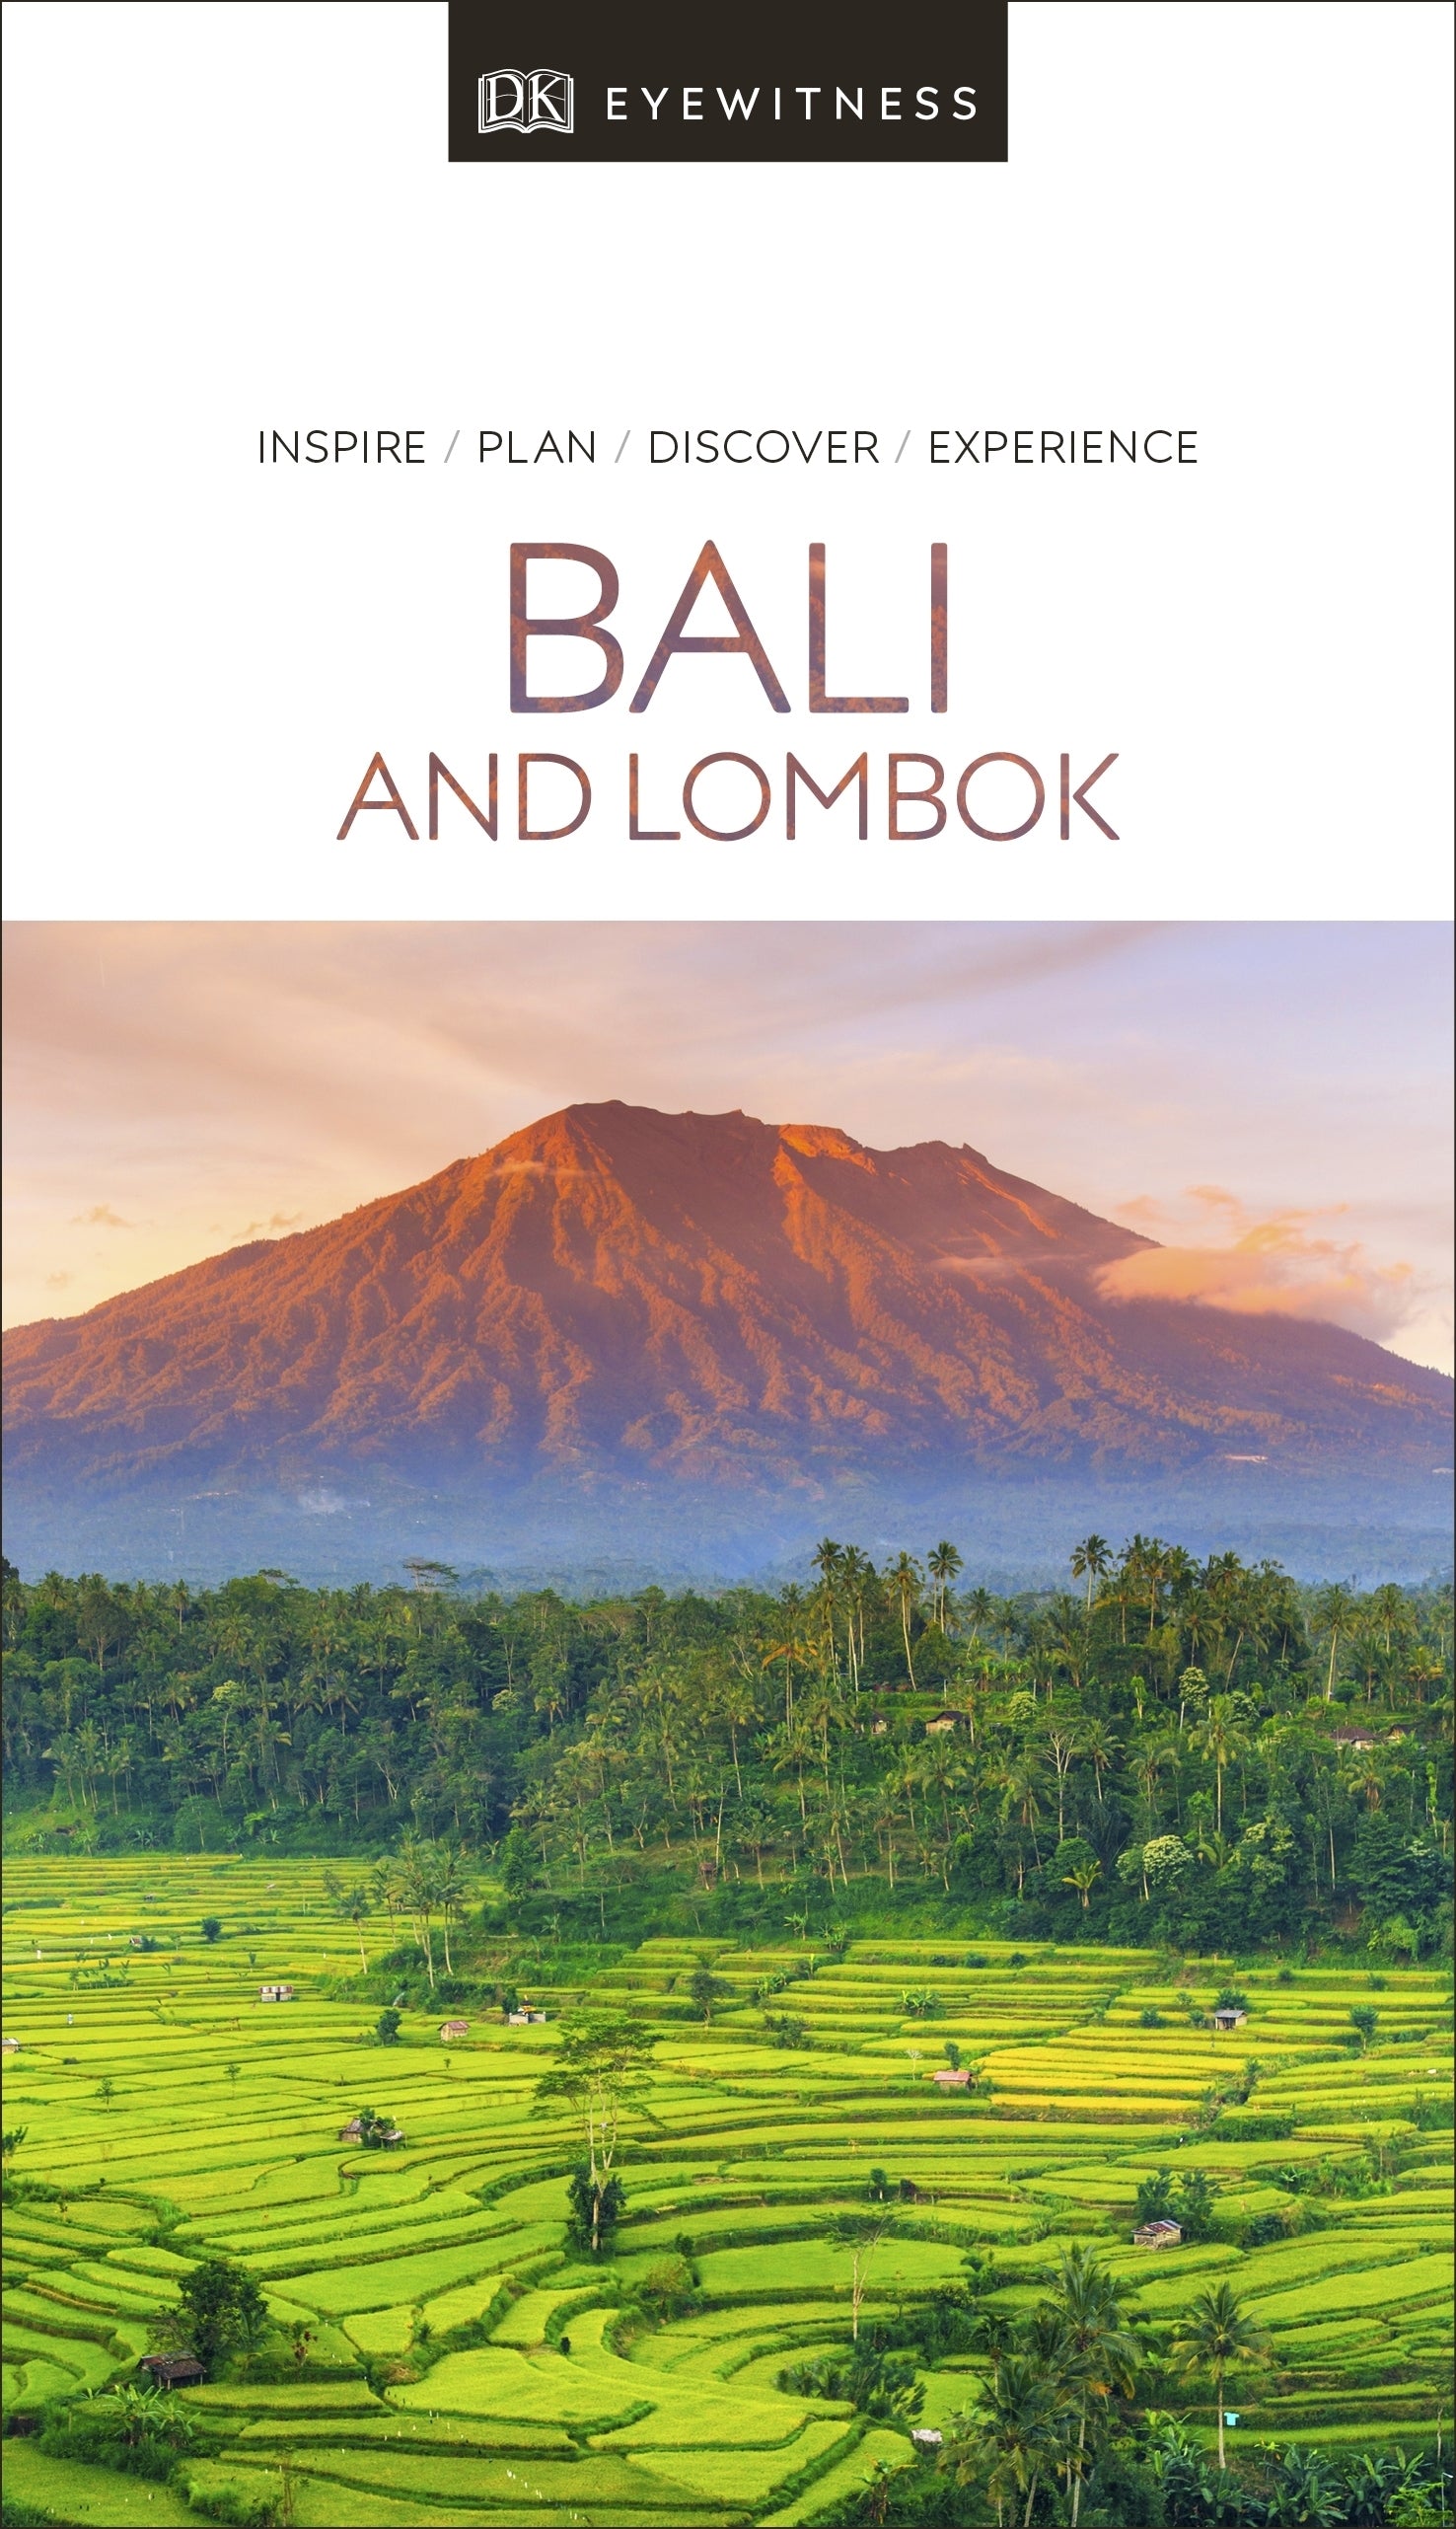 DK Eyewitness Bali & Lombok